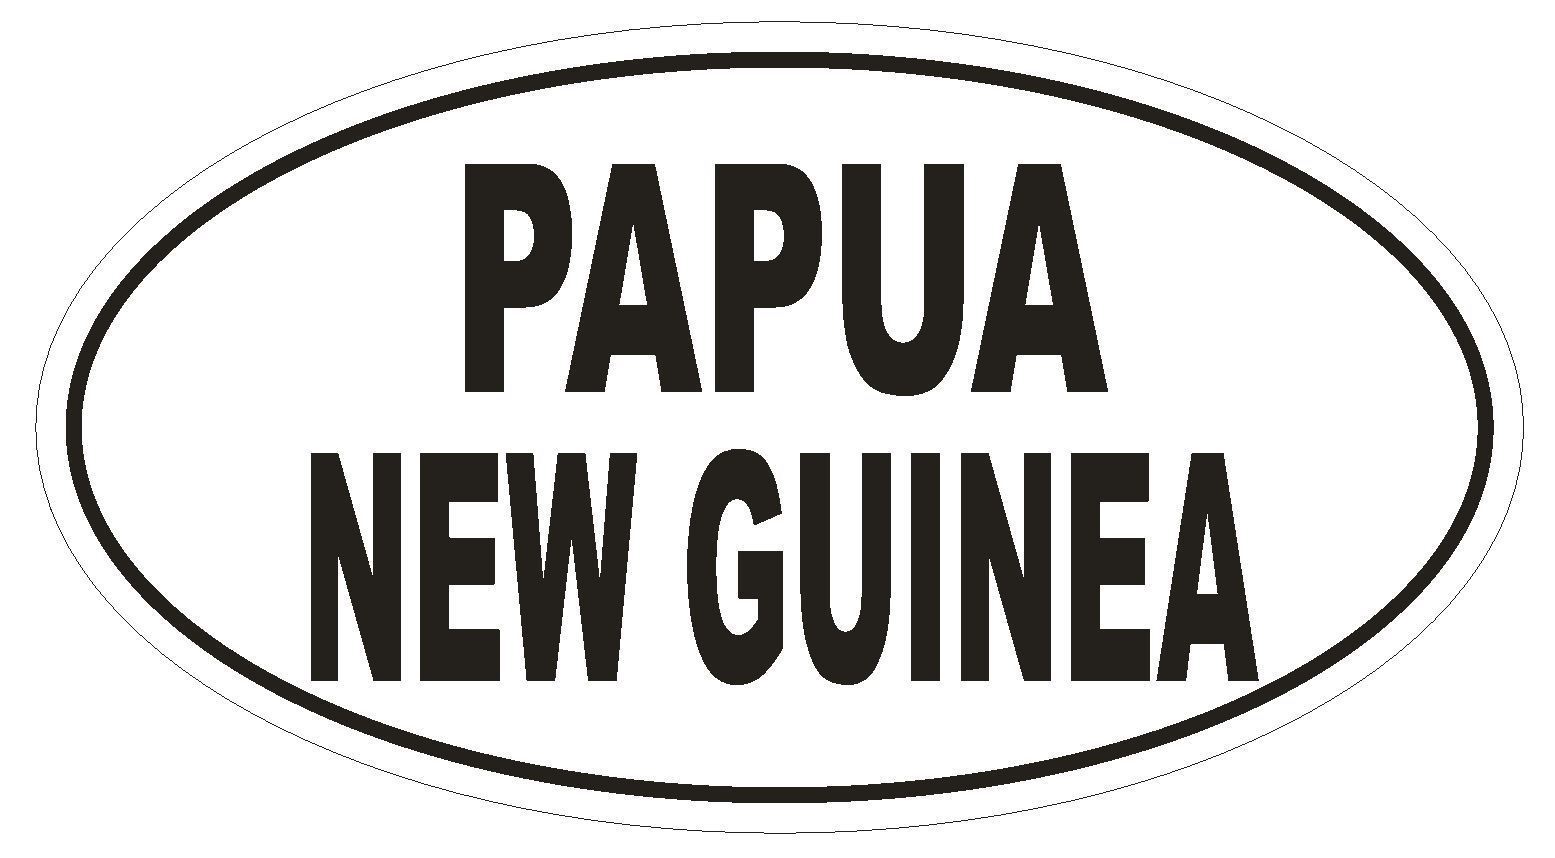 Papua New Guinea Oval Bumper Sticker or Helmet Sticker D2220 Euro Country Code - $1.39 - $75.00